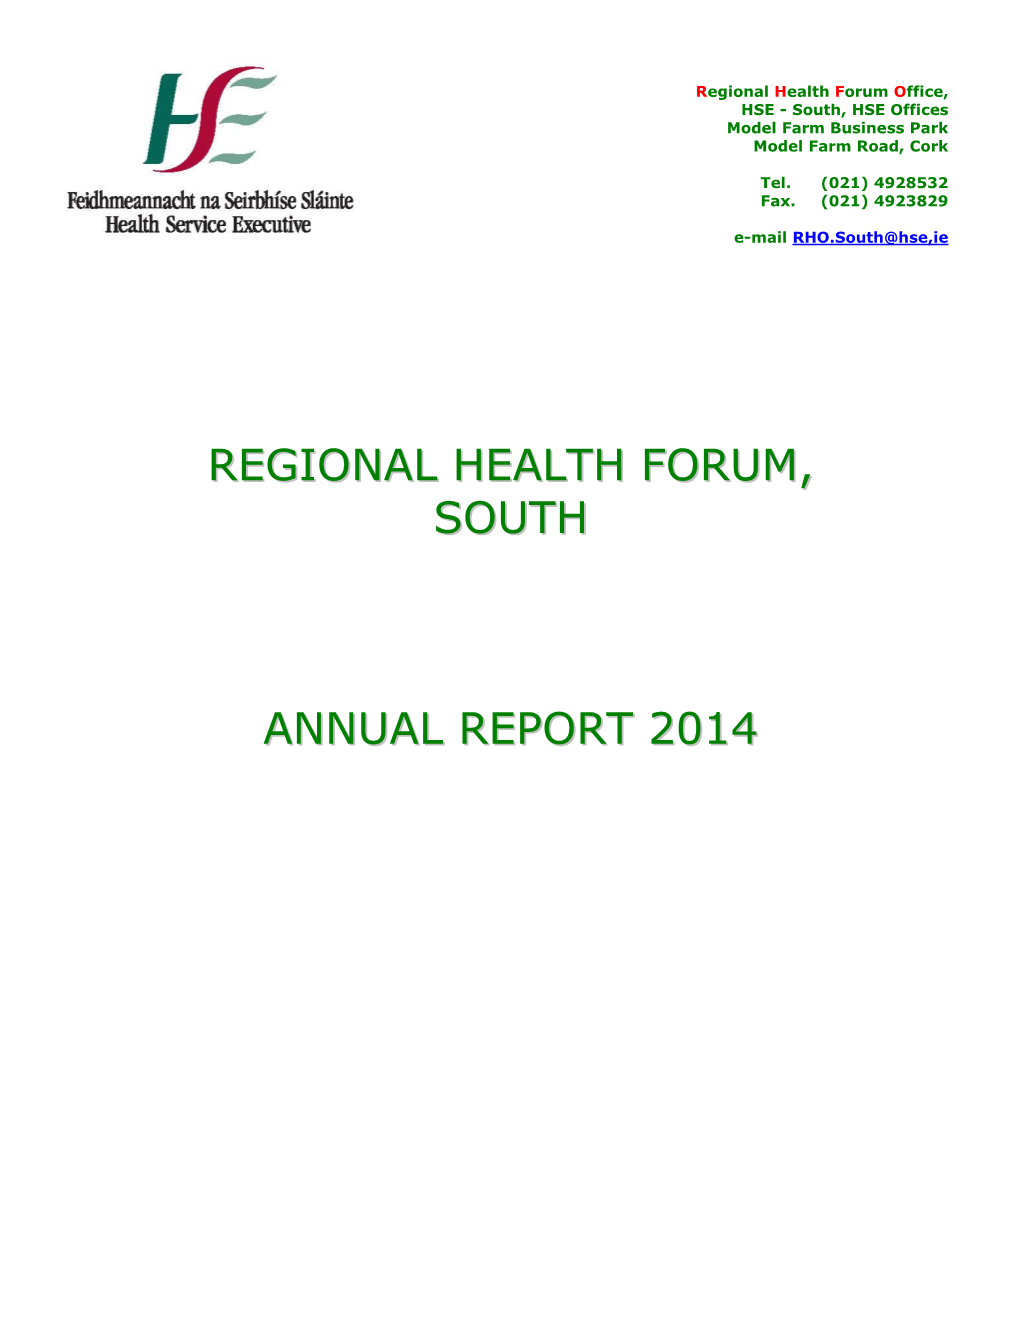 Regional Health Forum, South Annual Report 2014